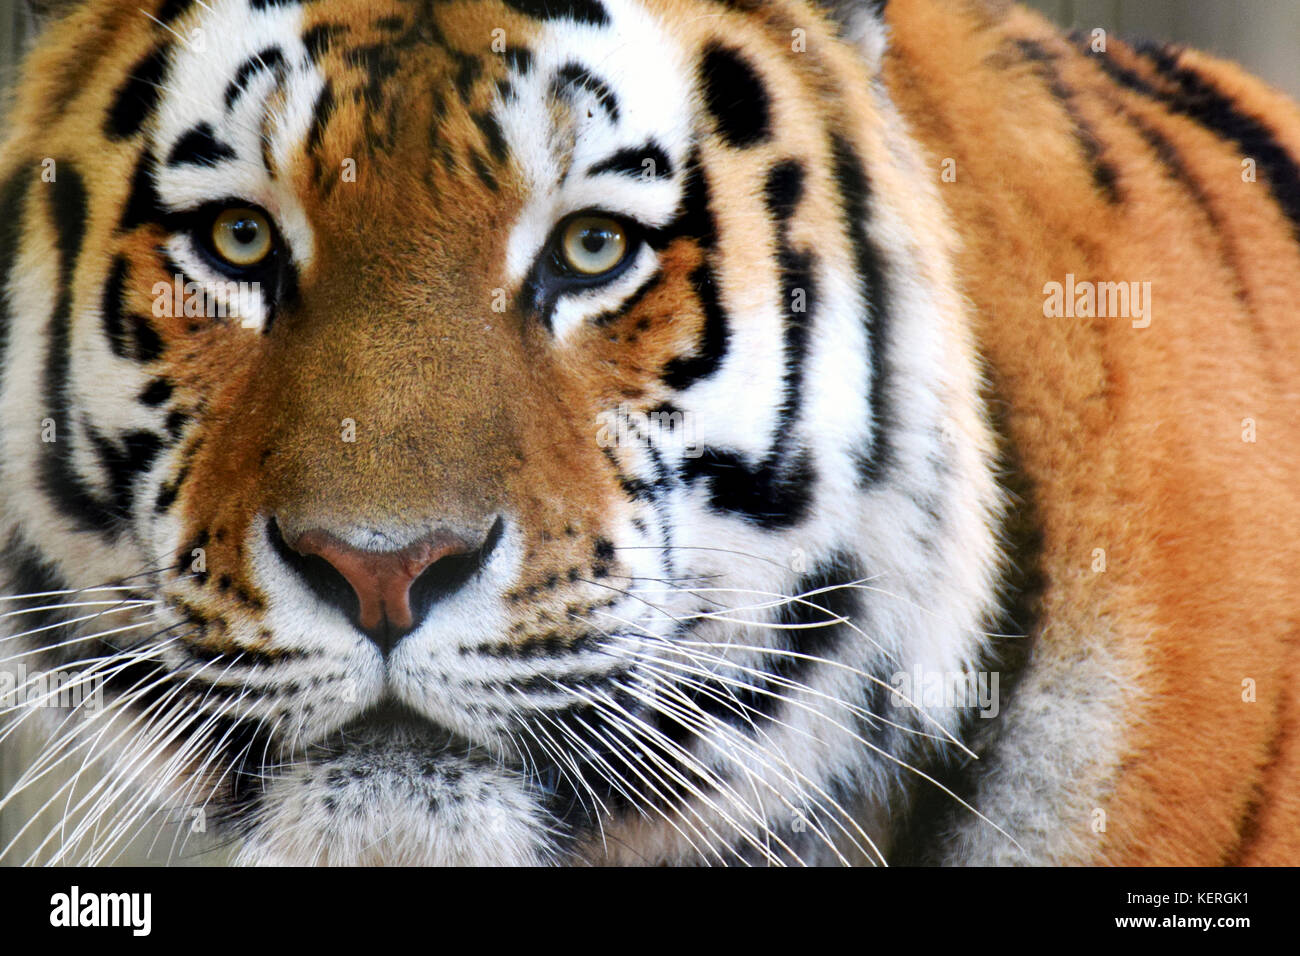 Siberian tiger (Panthera tigris altaica), also called Amur tiger looking intensive at camera. Horizontal close up image. Stock Photo